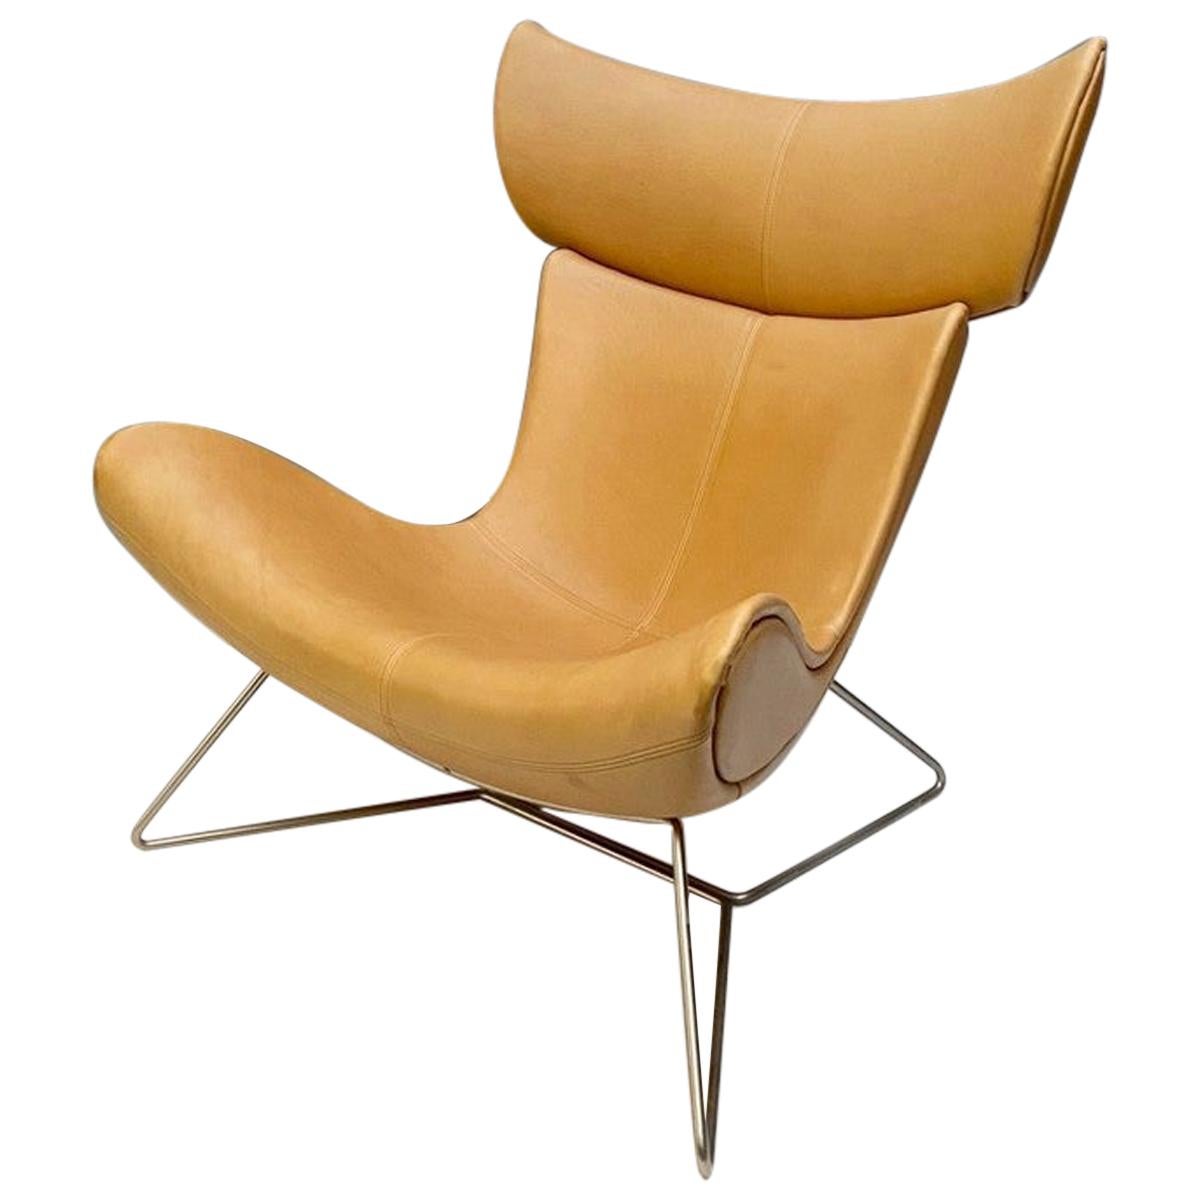 Henrik Pedersen "Imola" Lounge Chair Leather